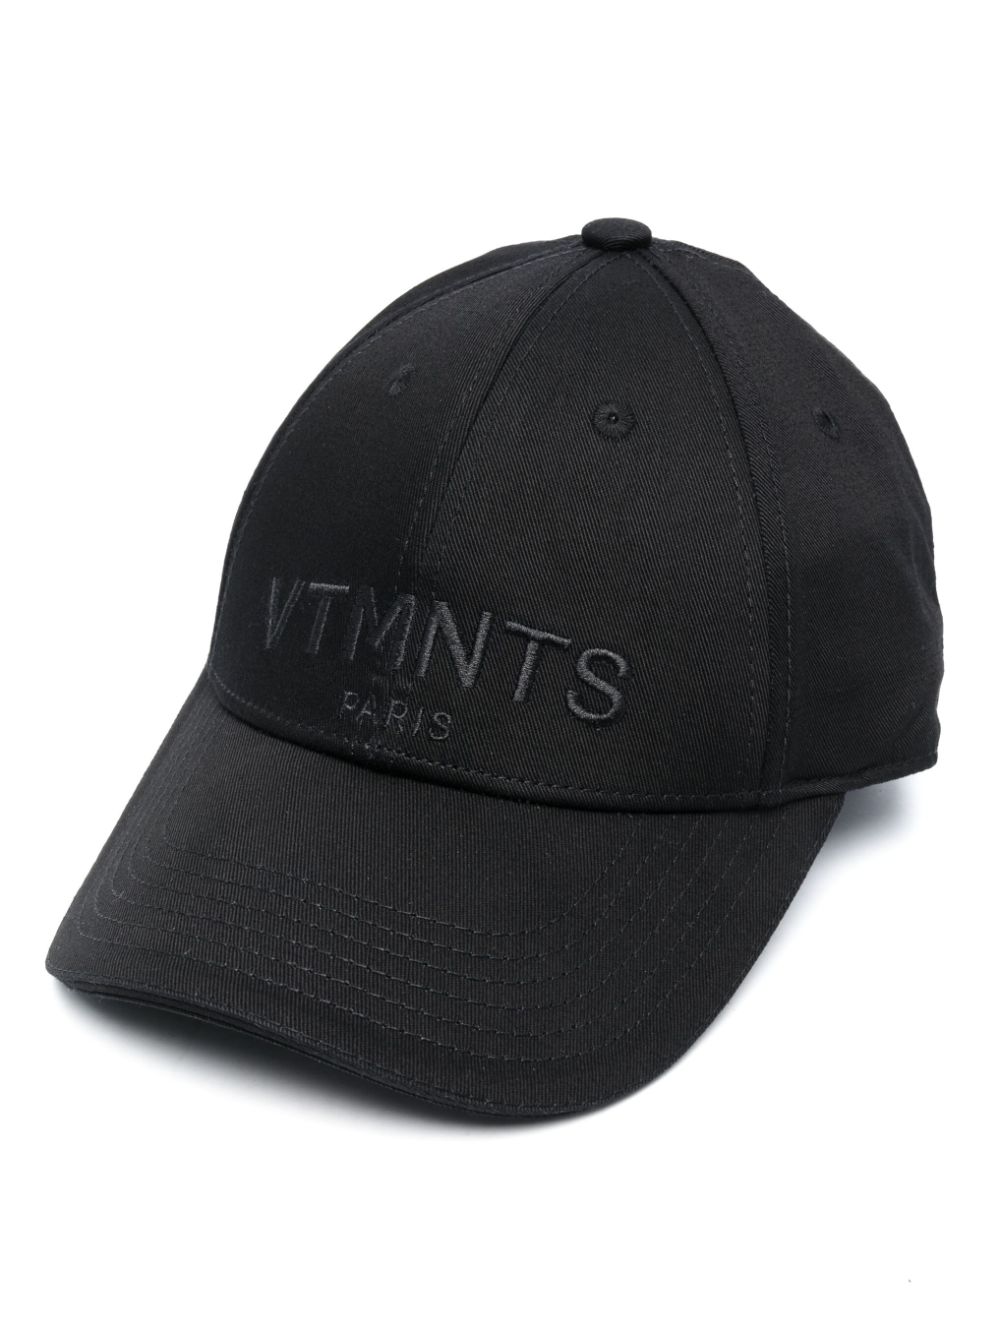 Vtmnts VTMNTS- Logo Hat